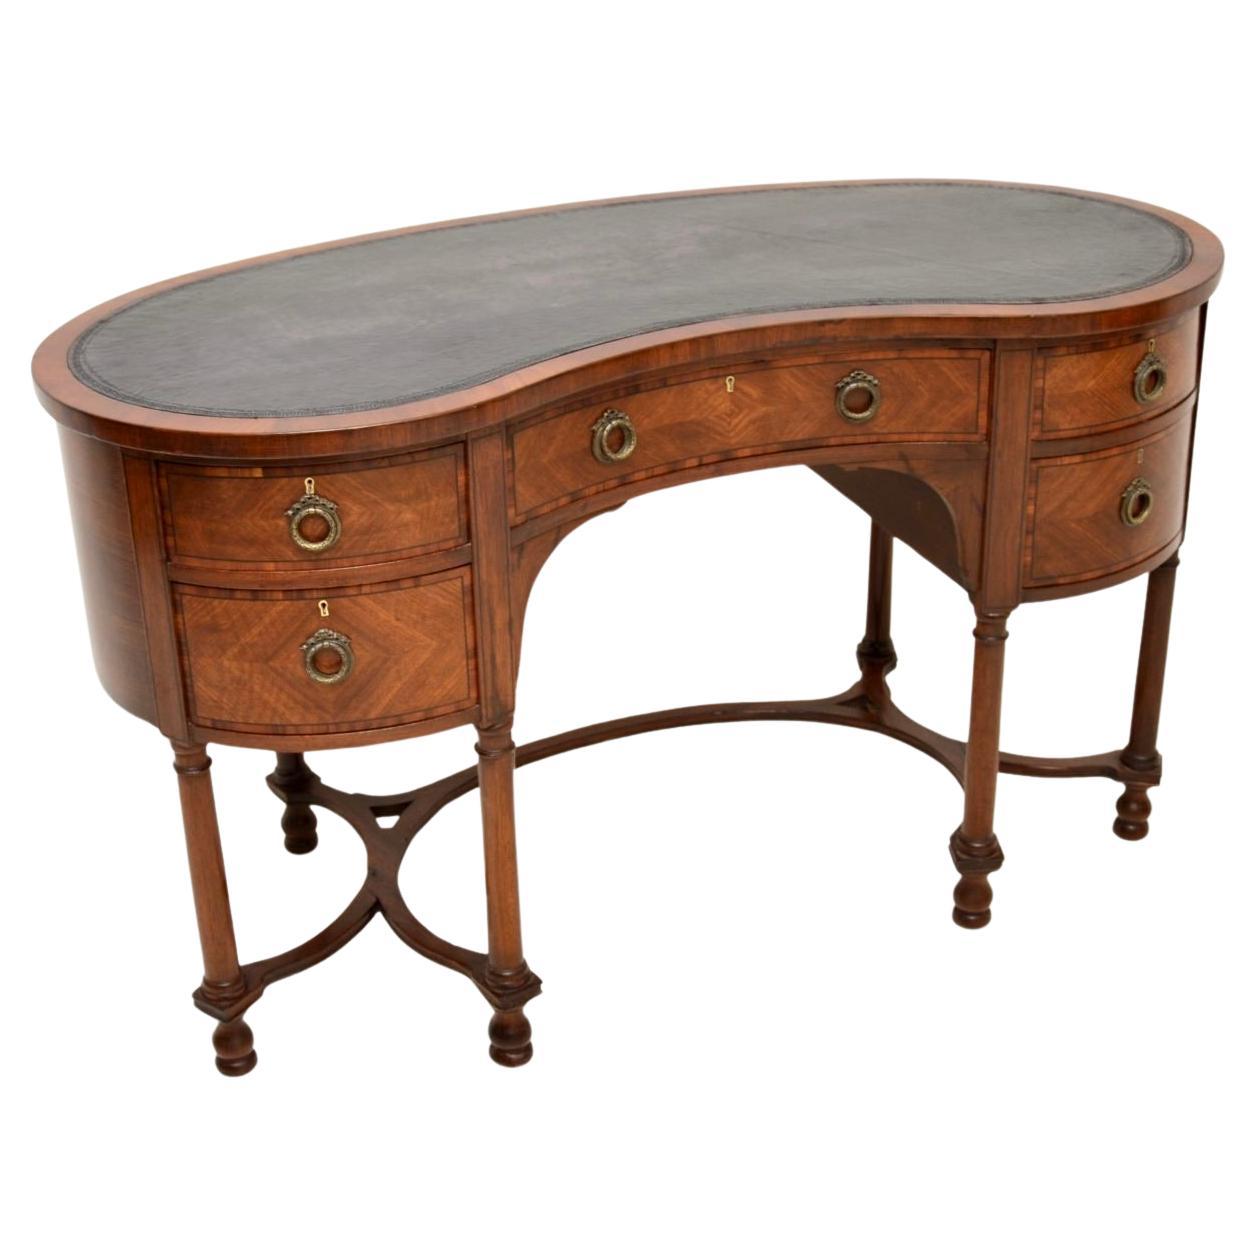 Antique Georgian Style Kidney Shaped Desk For Sale